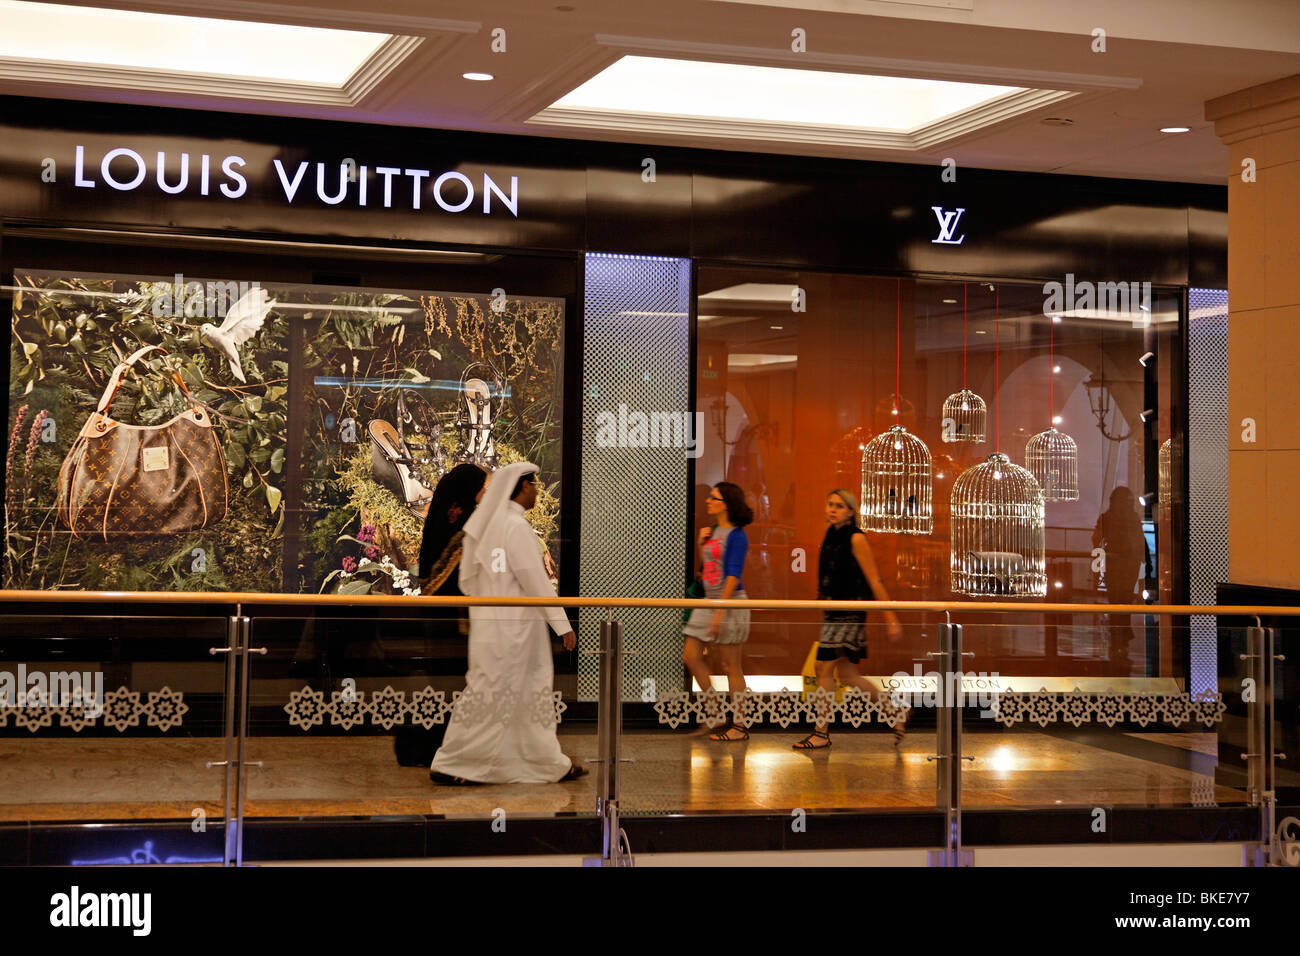 Louis Vuitton shop at Dubai Mall of Emirates shopping mall Stock Photo, Royalty Free Image ...